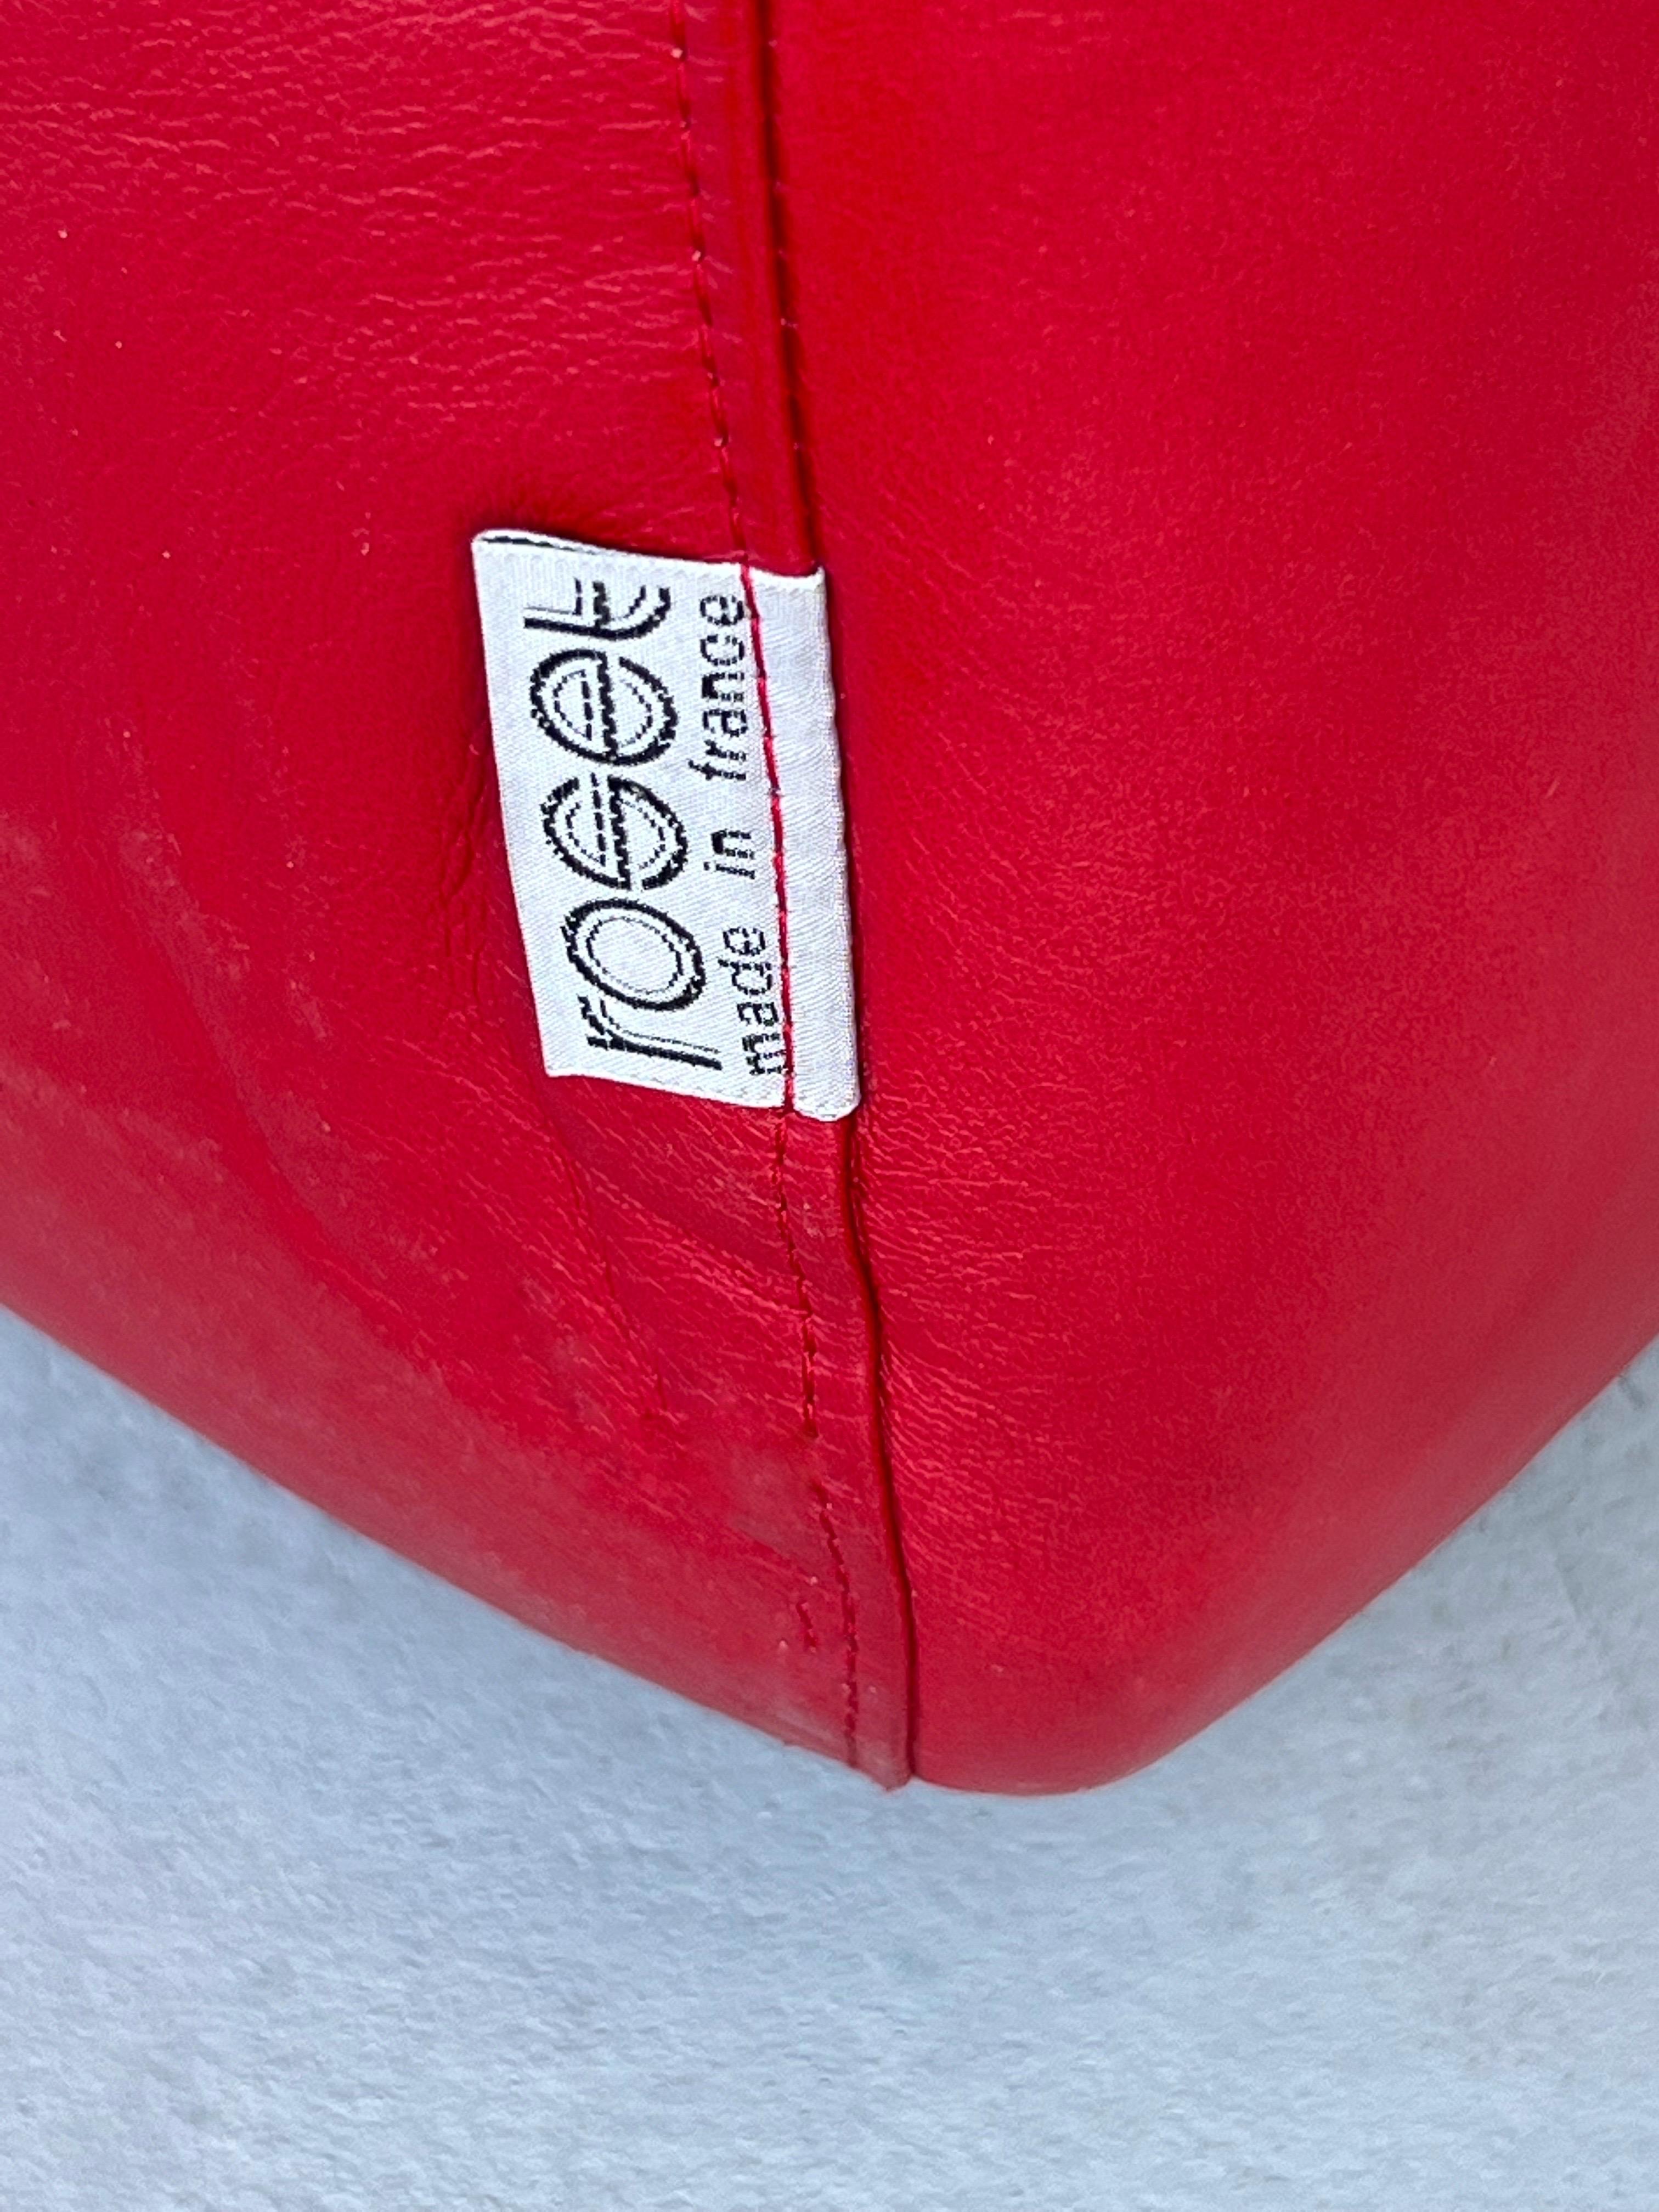 Ligne Roset Red Leather Flou Flou Sofa and Ottoman by D’Urbino De Pas Lomazzi 2